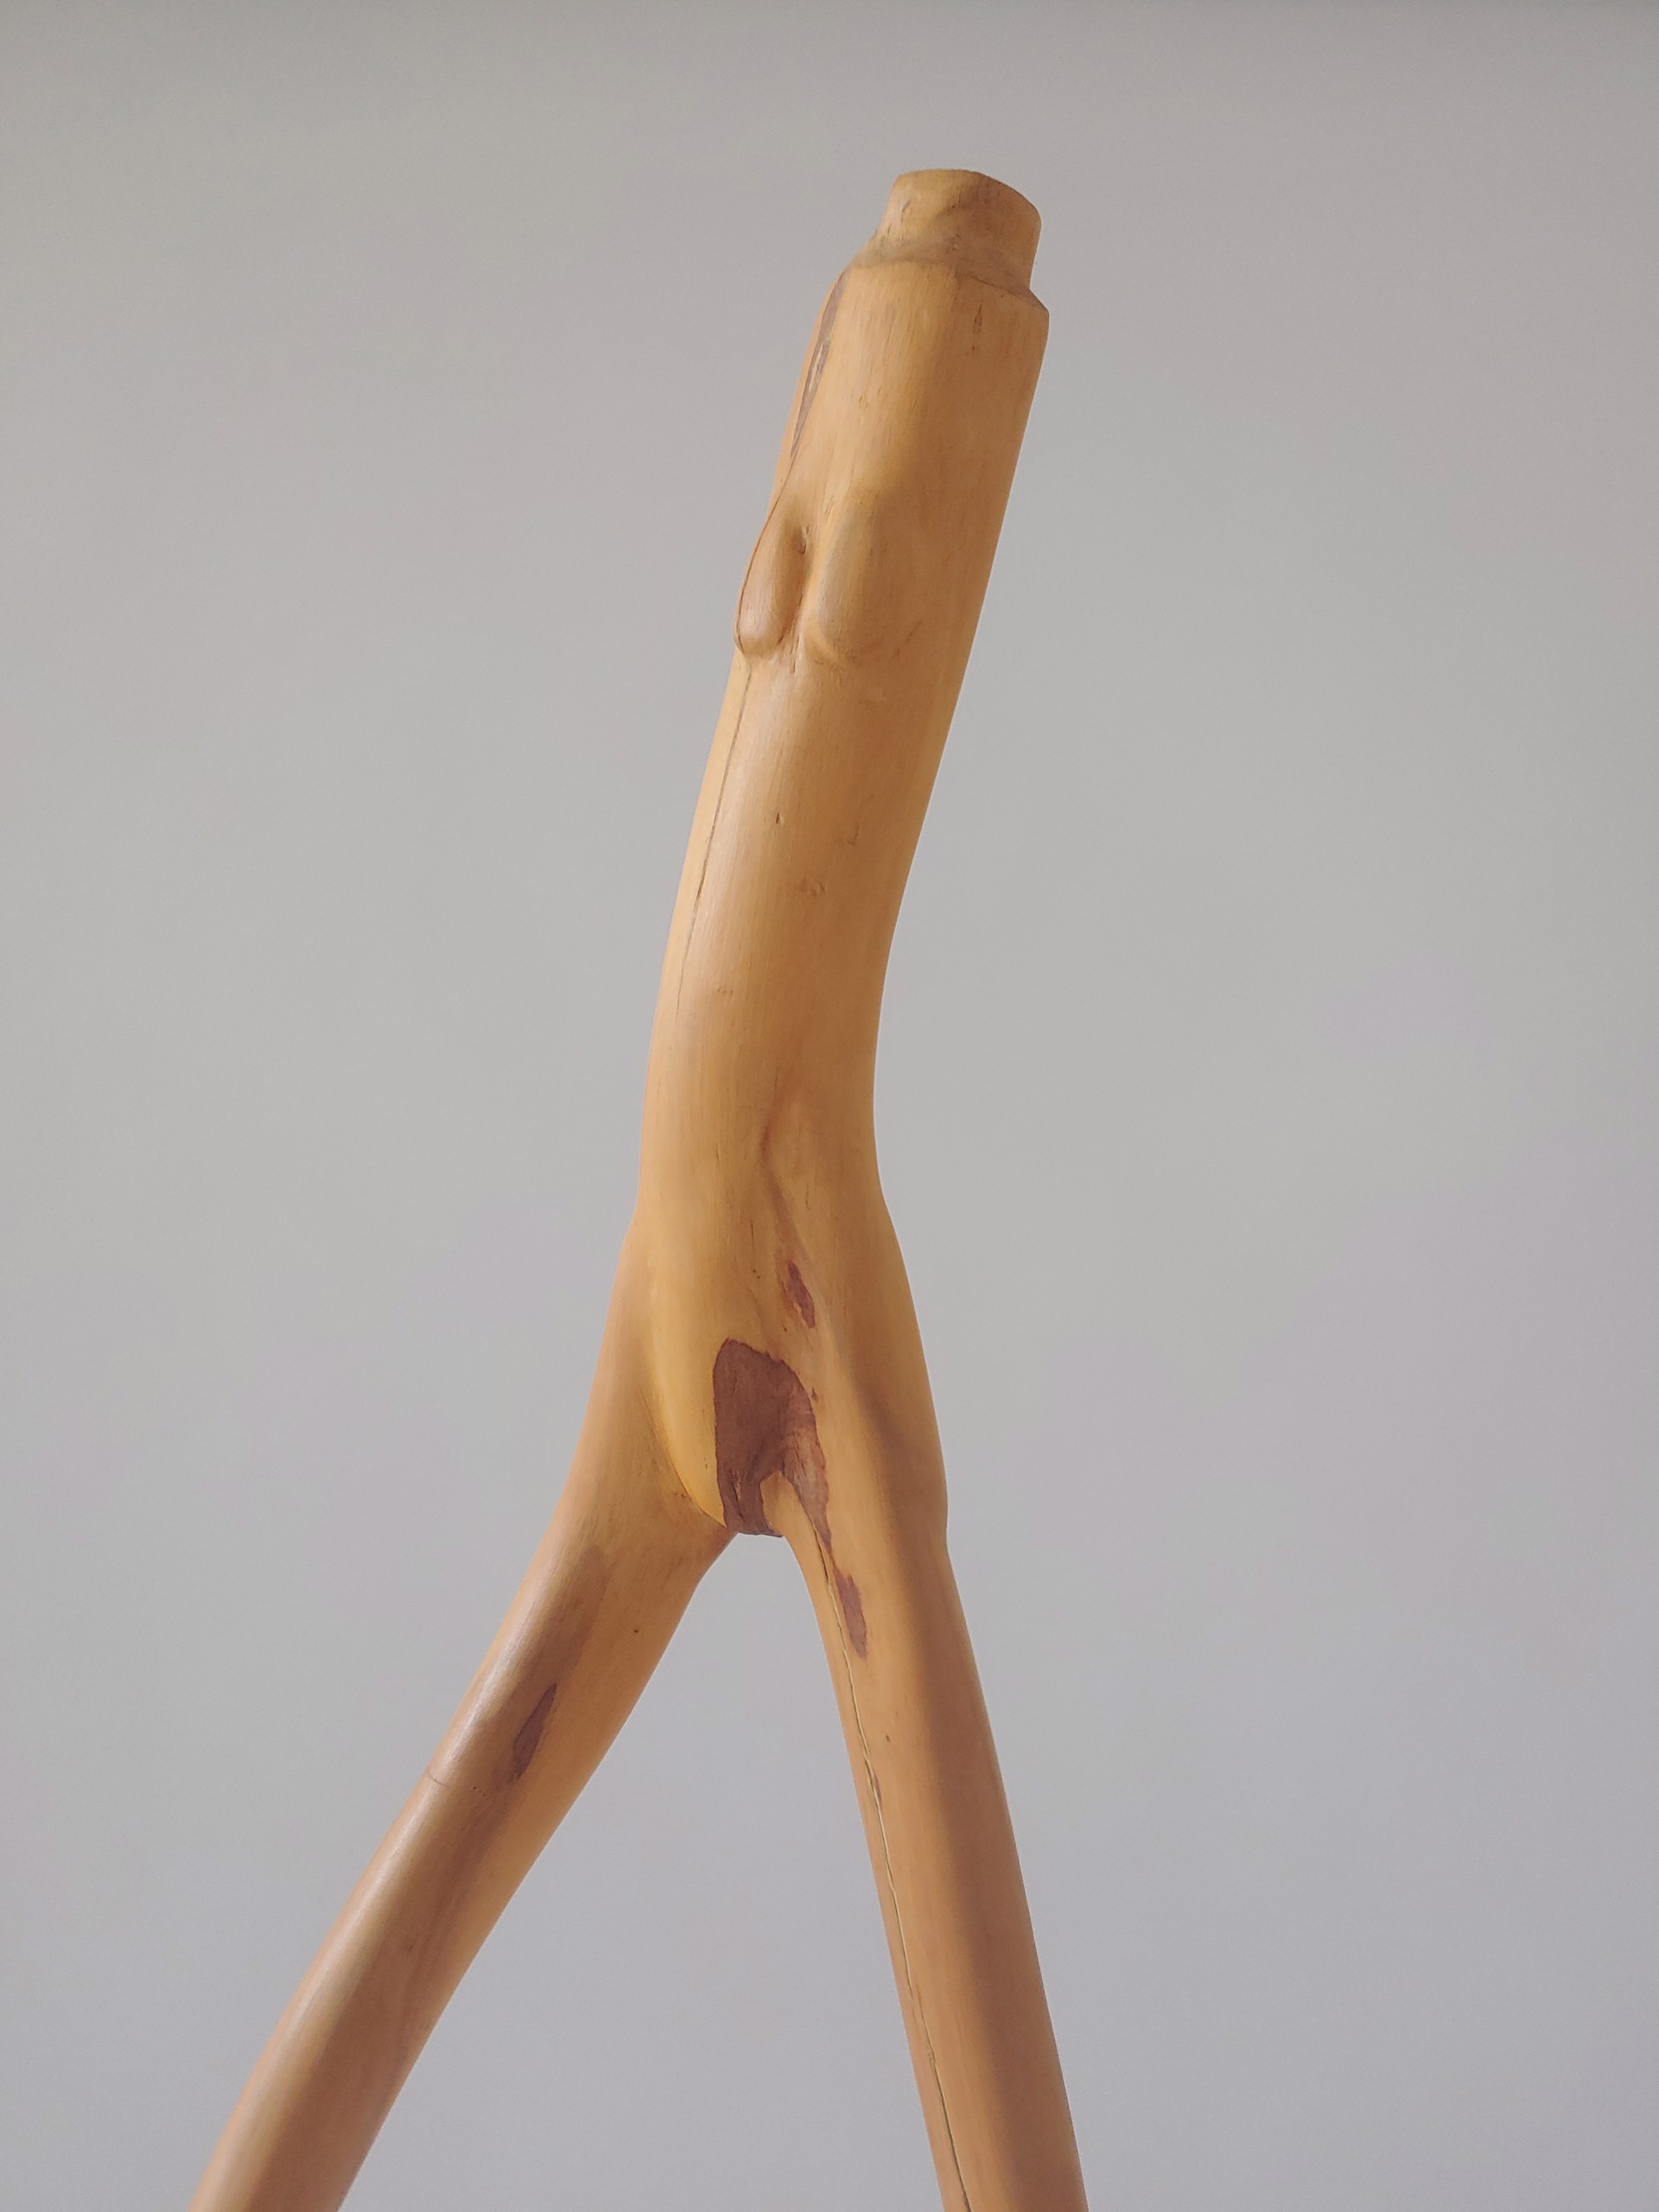 Willow - Wood Sculpture by David Amdur